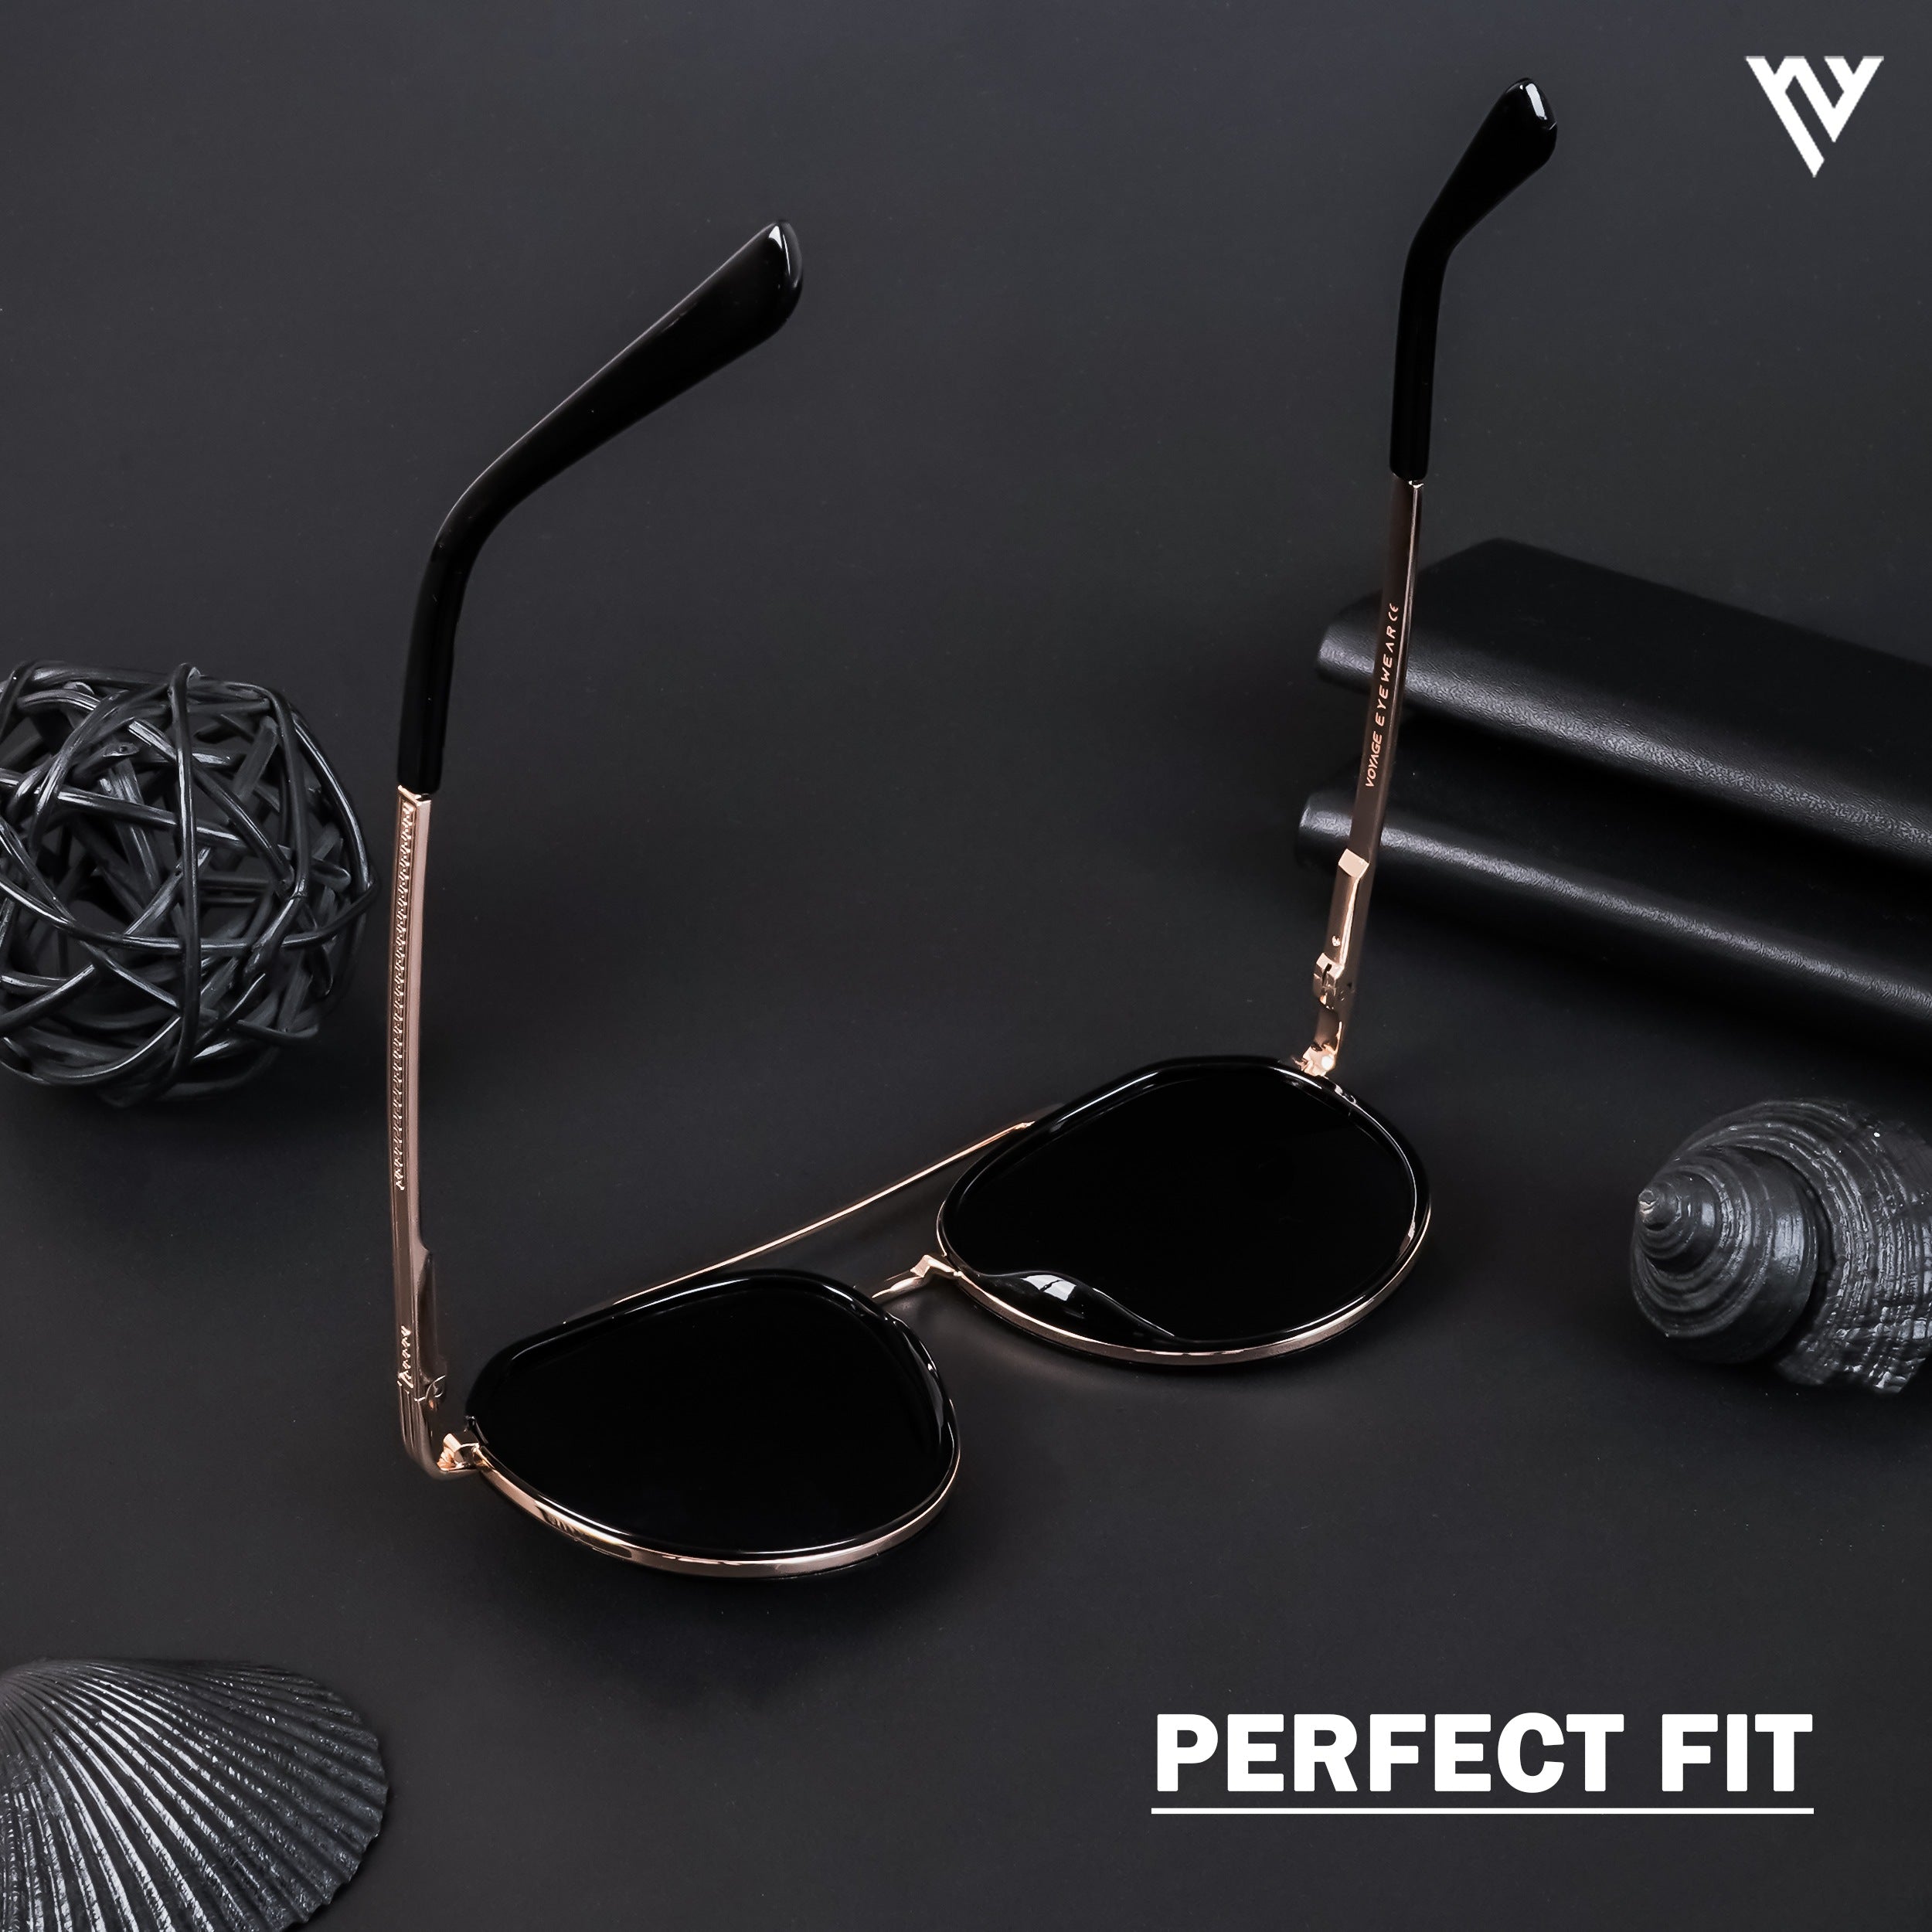 Voyage Exclusive Golden & Shine Black Polarized Round Sunglasses for Men & Women - PMG4311